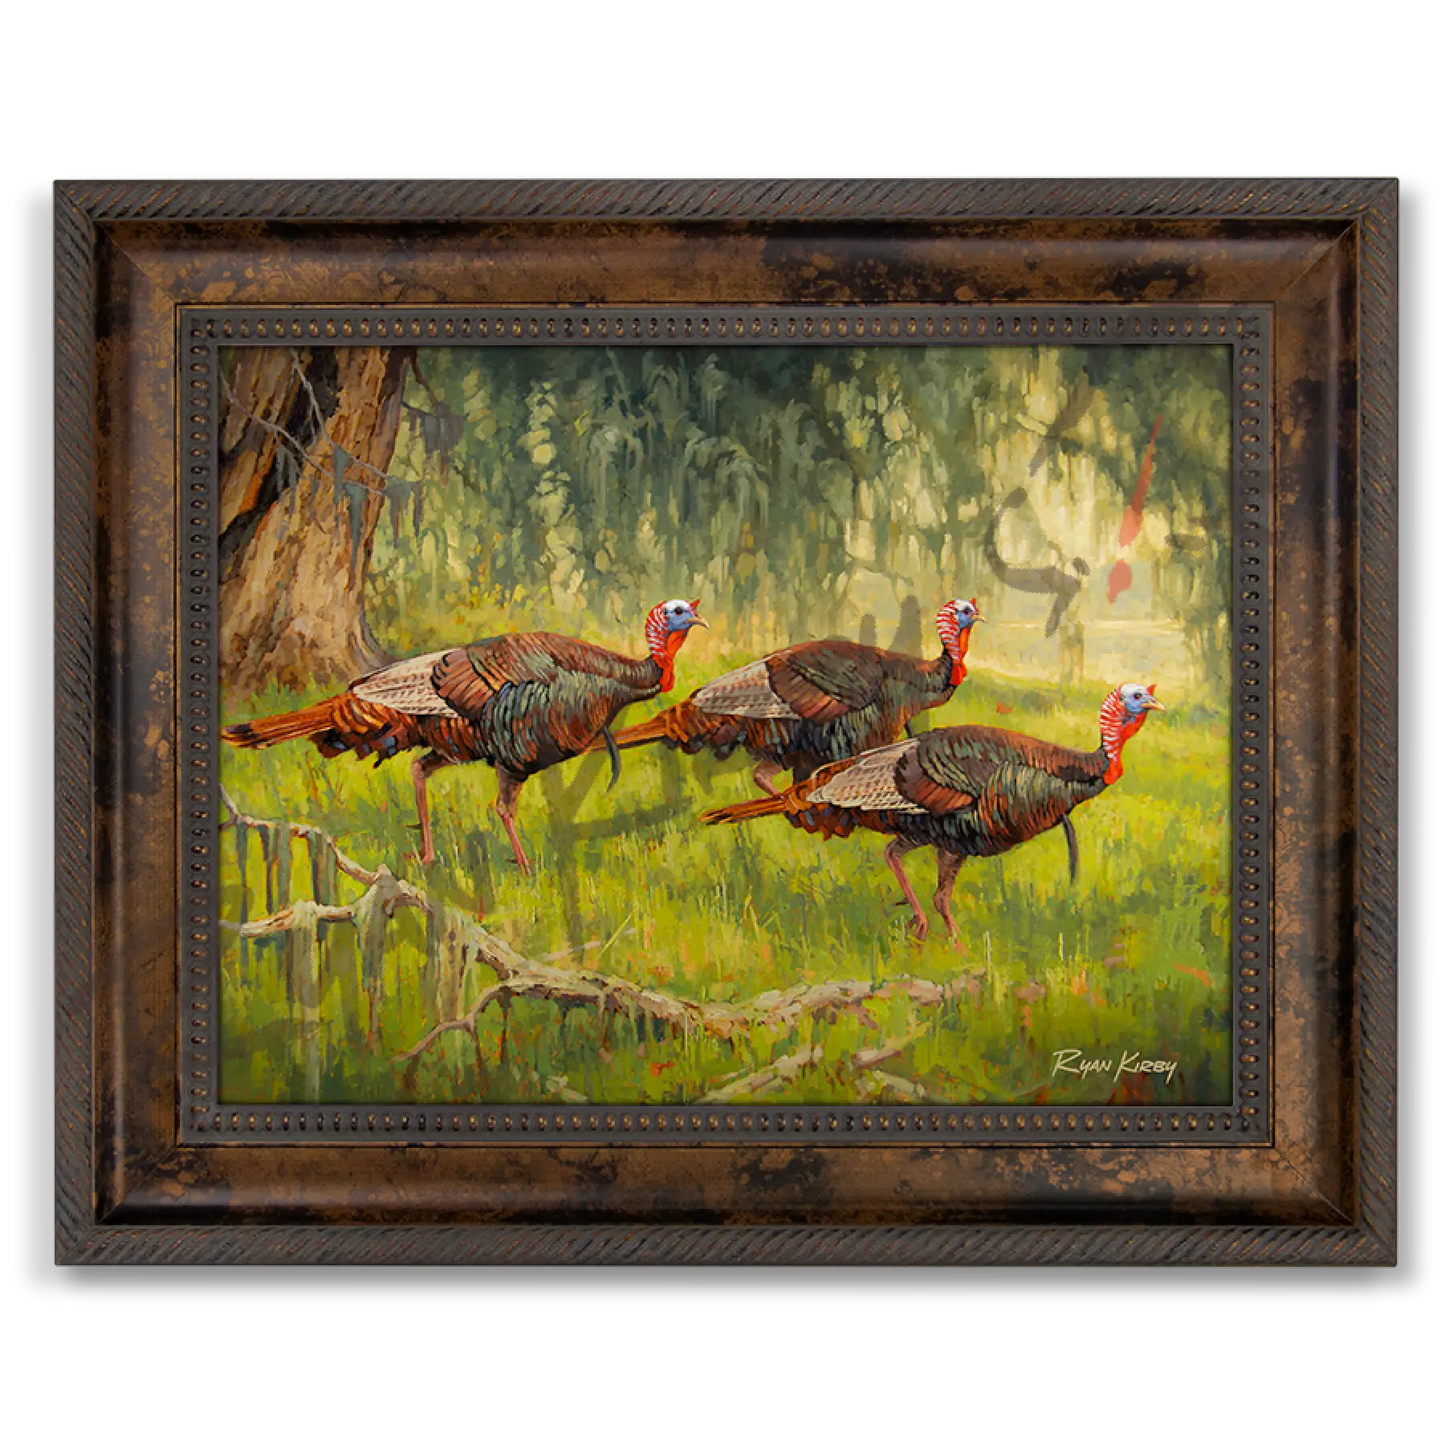 ’Bottomland Bachelors’ Wild Turkey Canvas Art Print With Signed Mossy Oak Stamp Classic Bronze